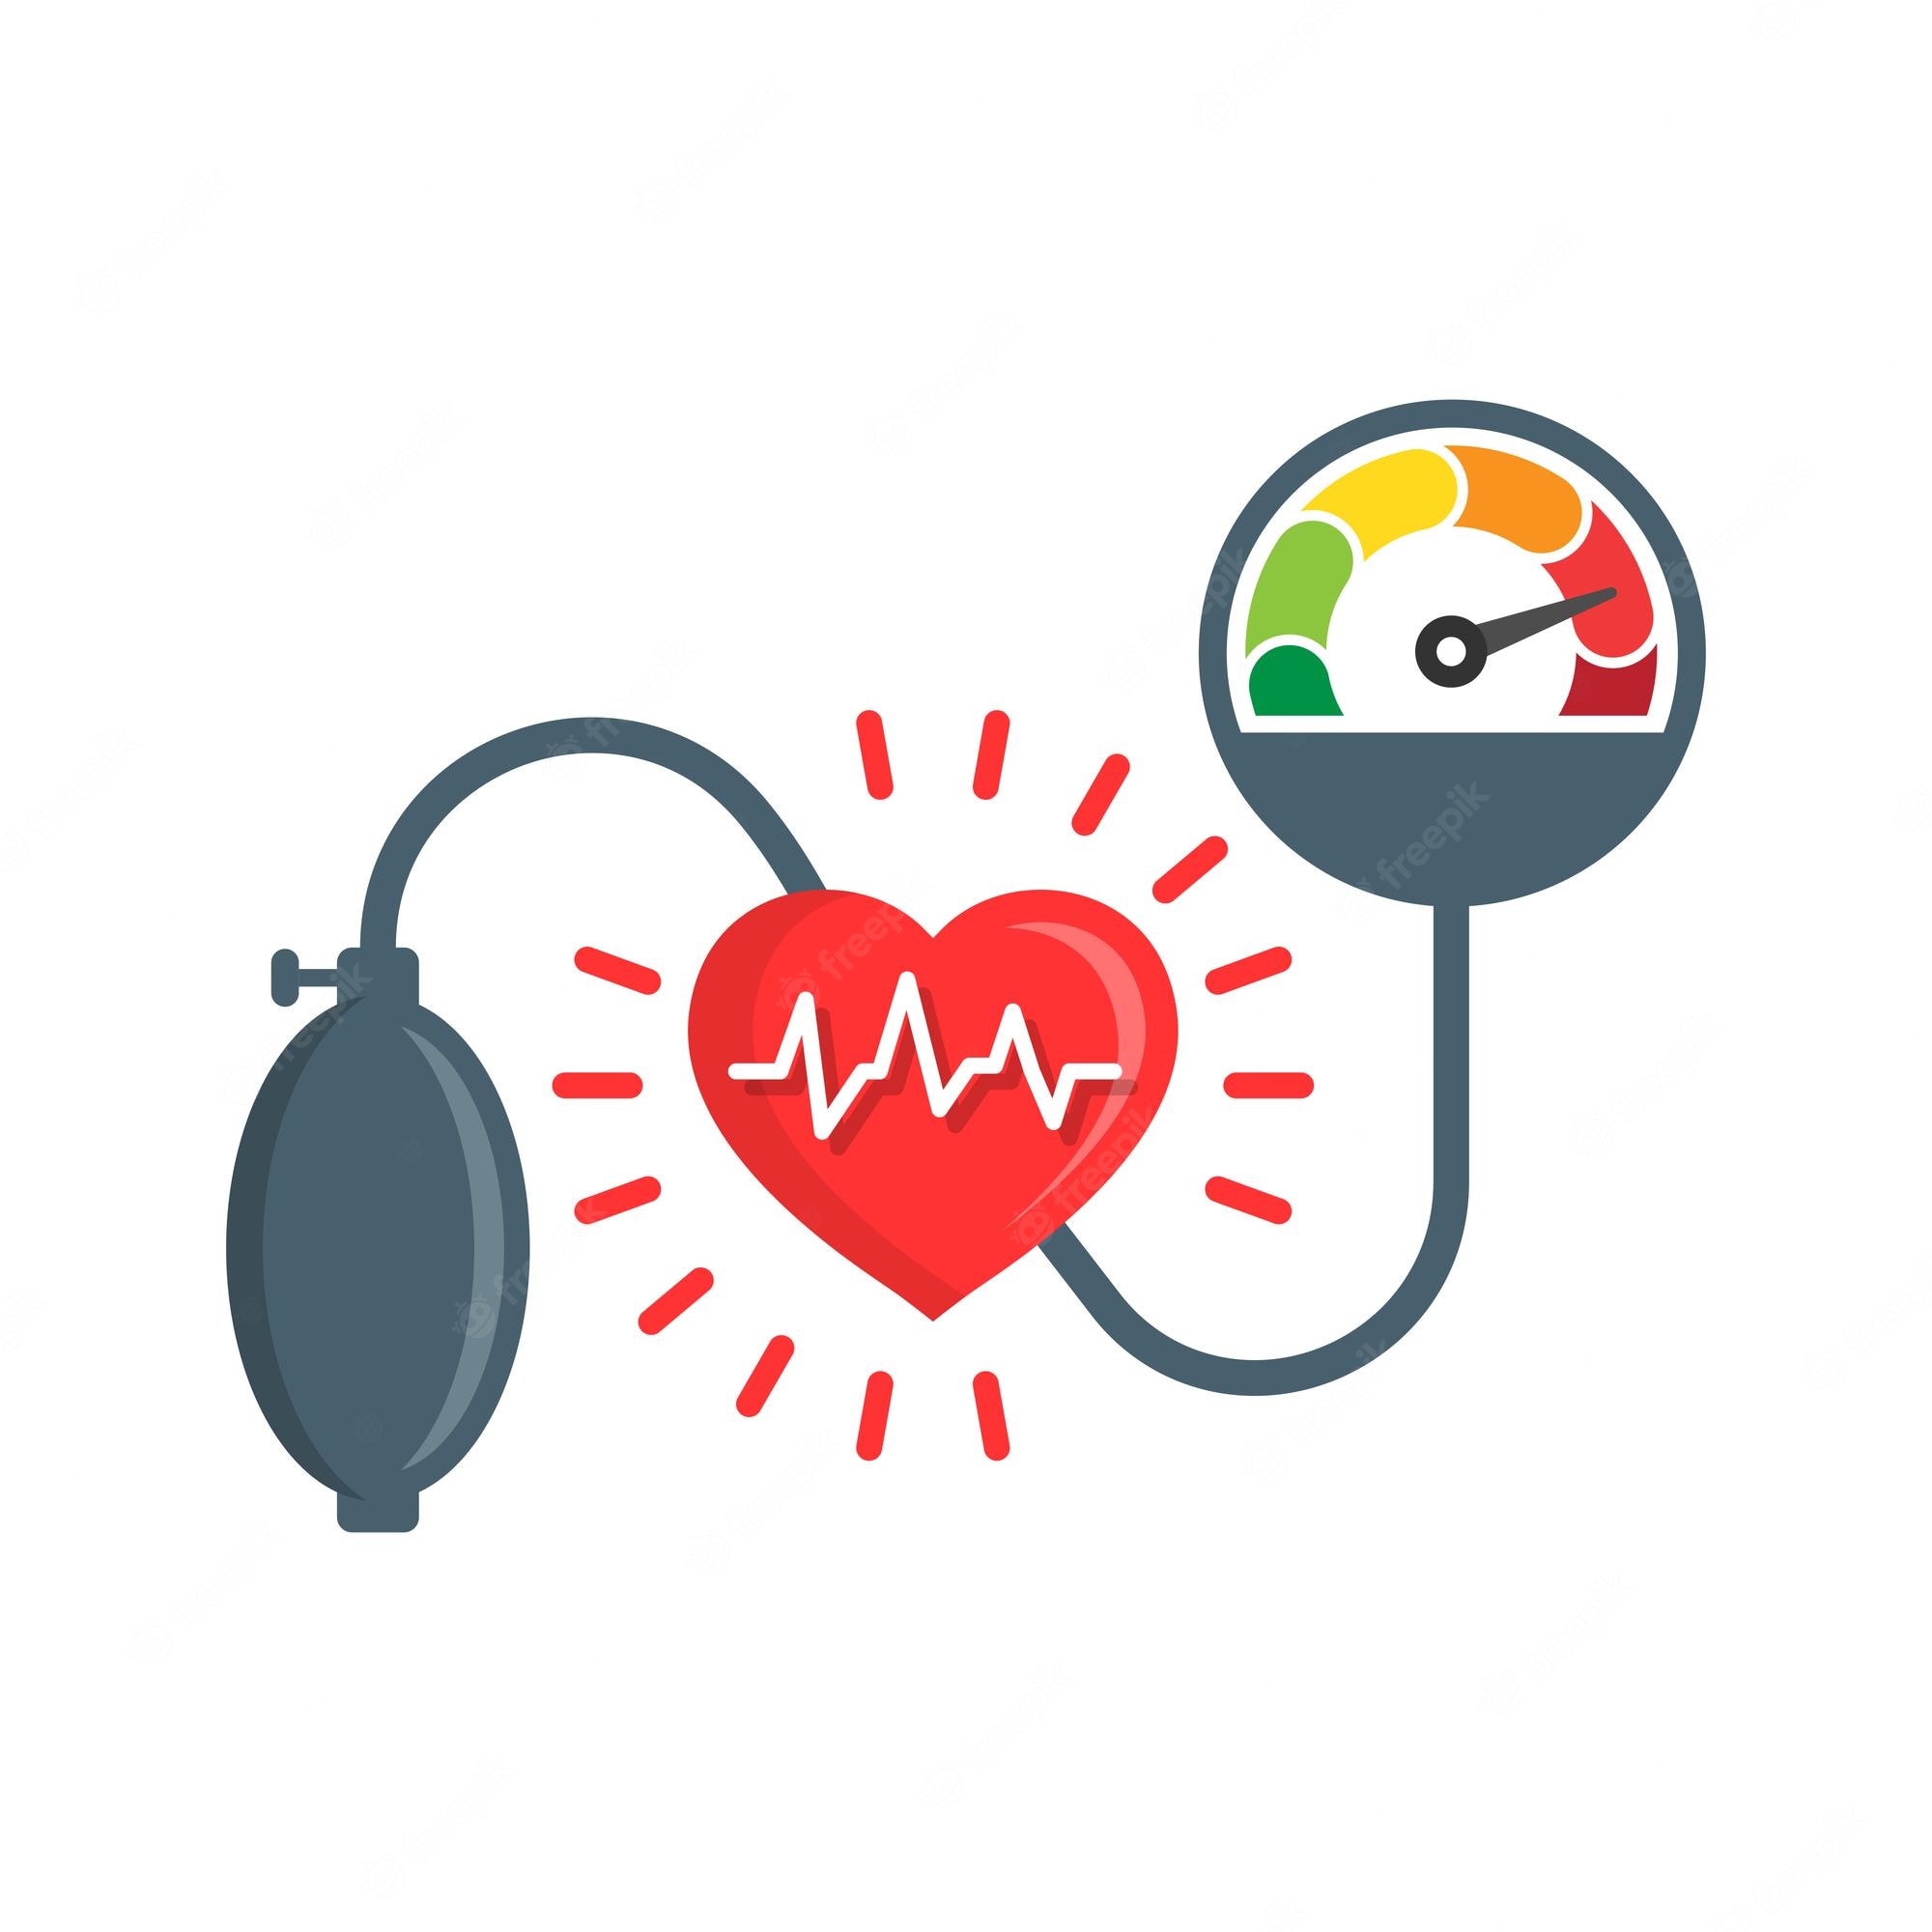 Blood Pressure Icon Image. Free Vectors, & PSD